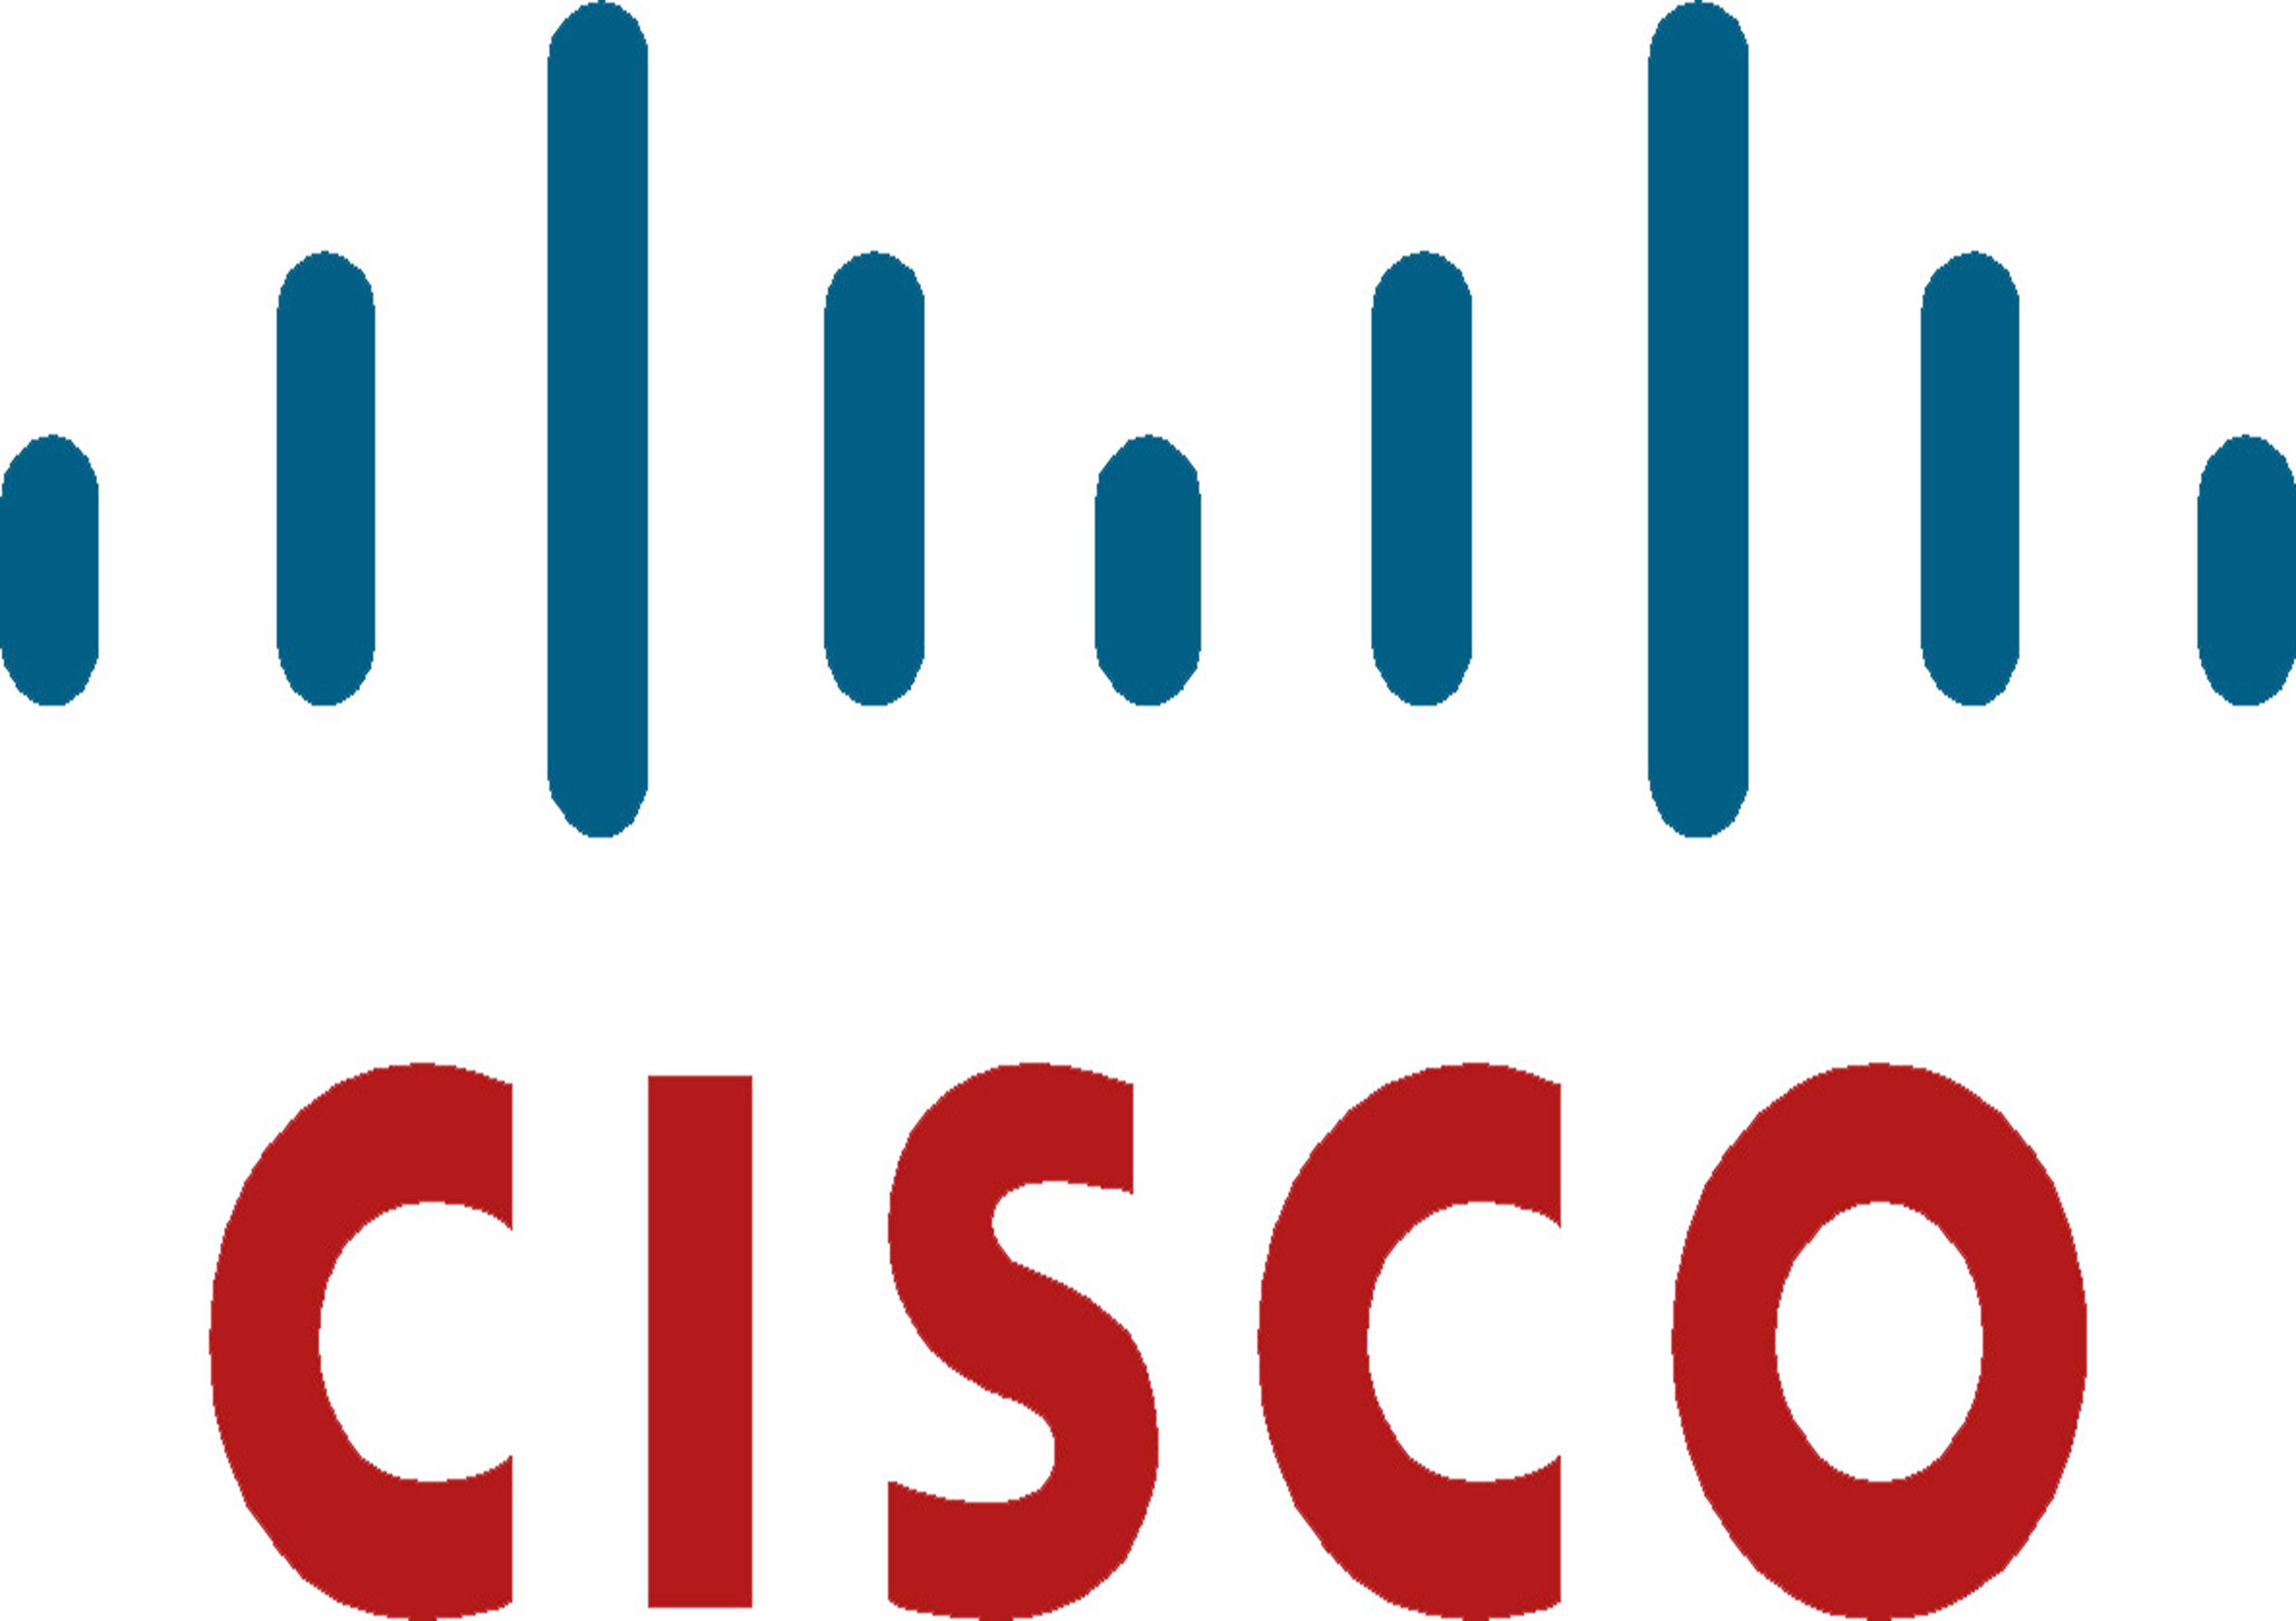 Cisco Net Worth